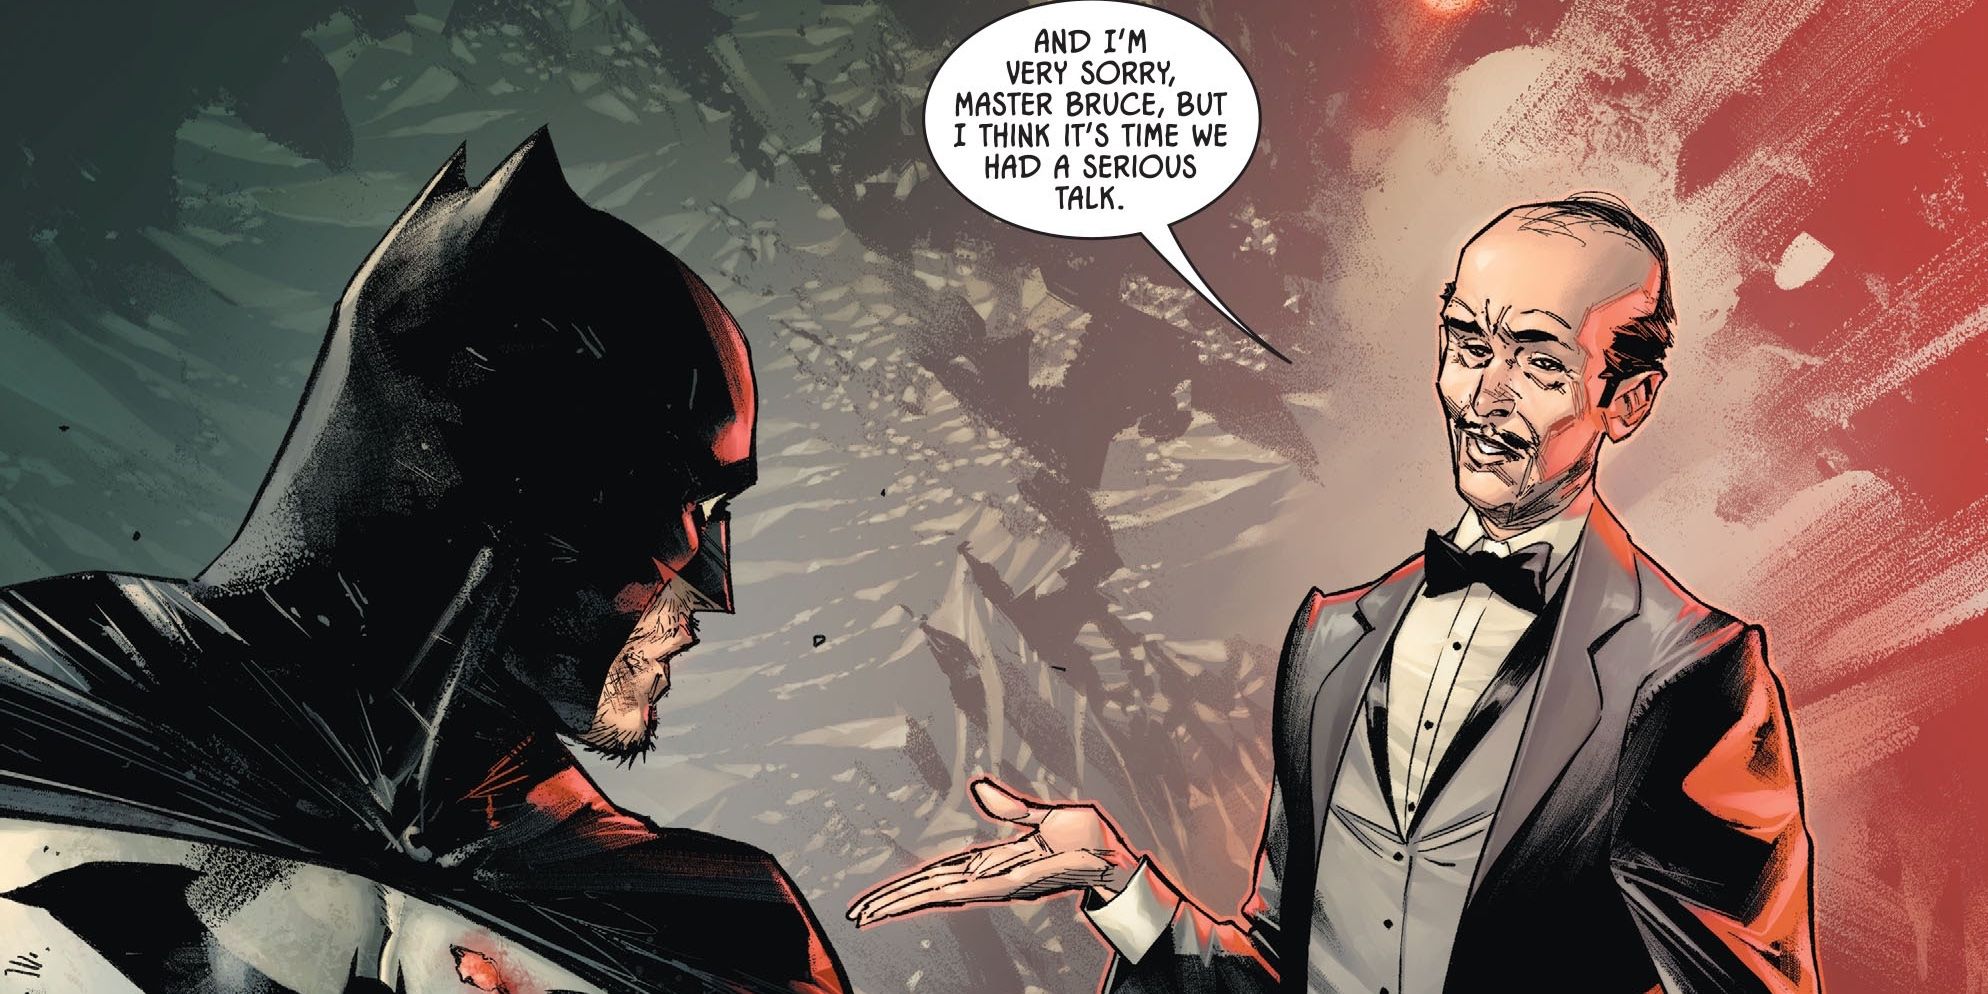 Alfred talking to Batman in the comics